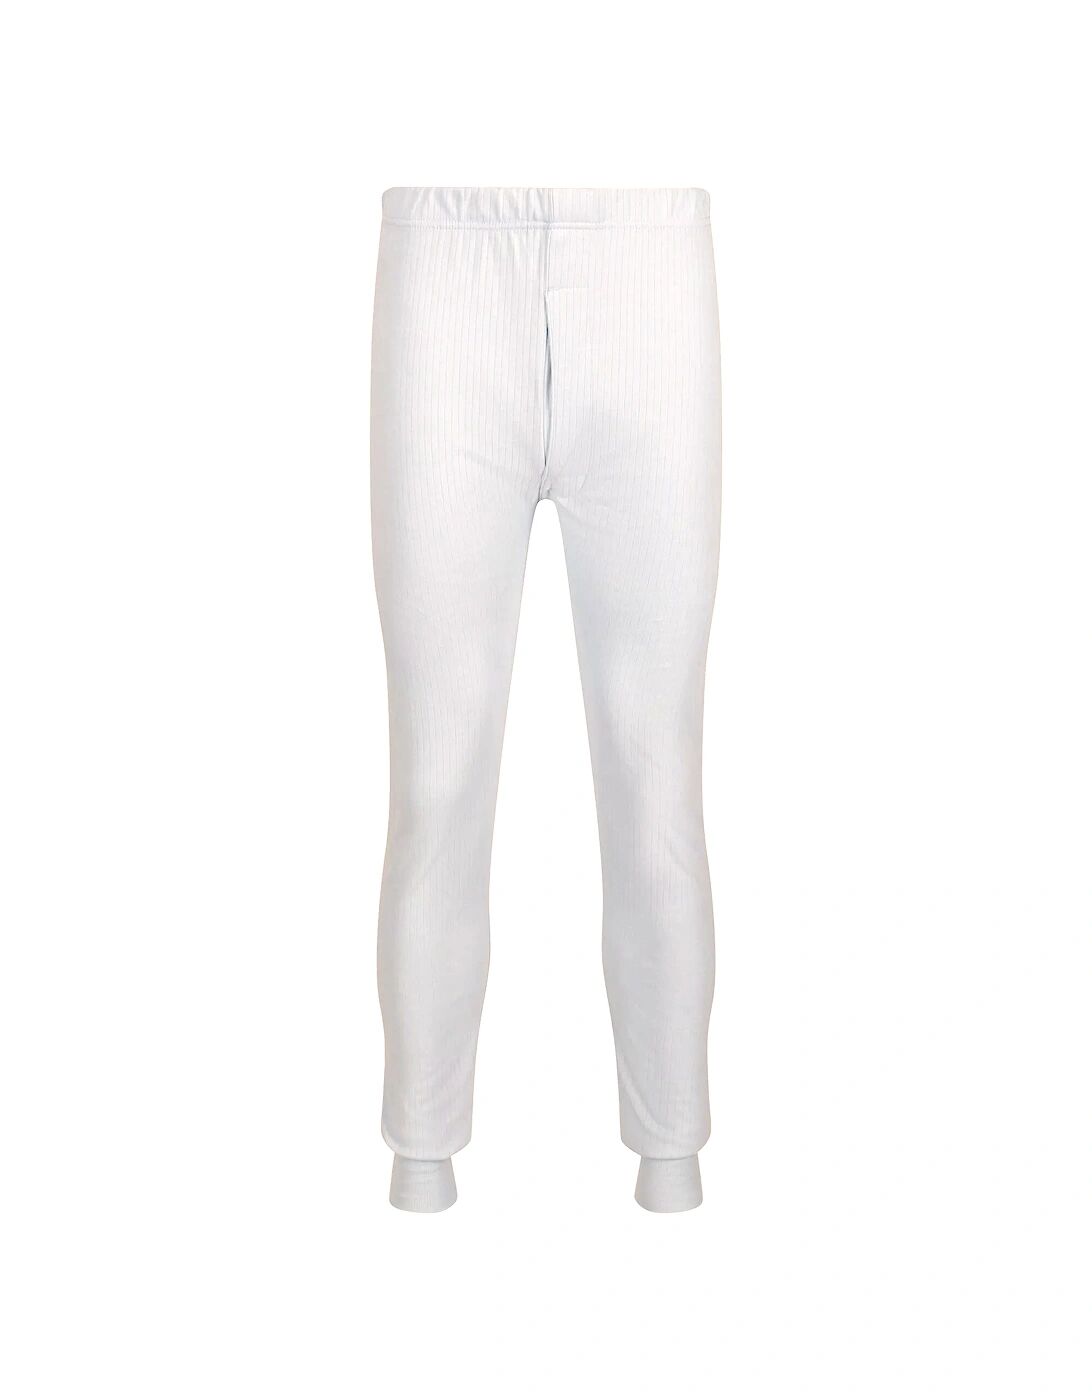 Men's Regatta Mens Thermal Underwear Long Johns - White - Size: 5/5.5/6.5/7/6/7.5